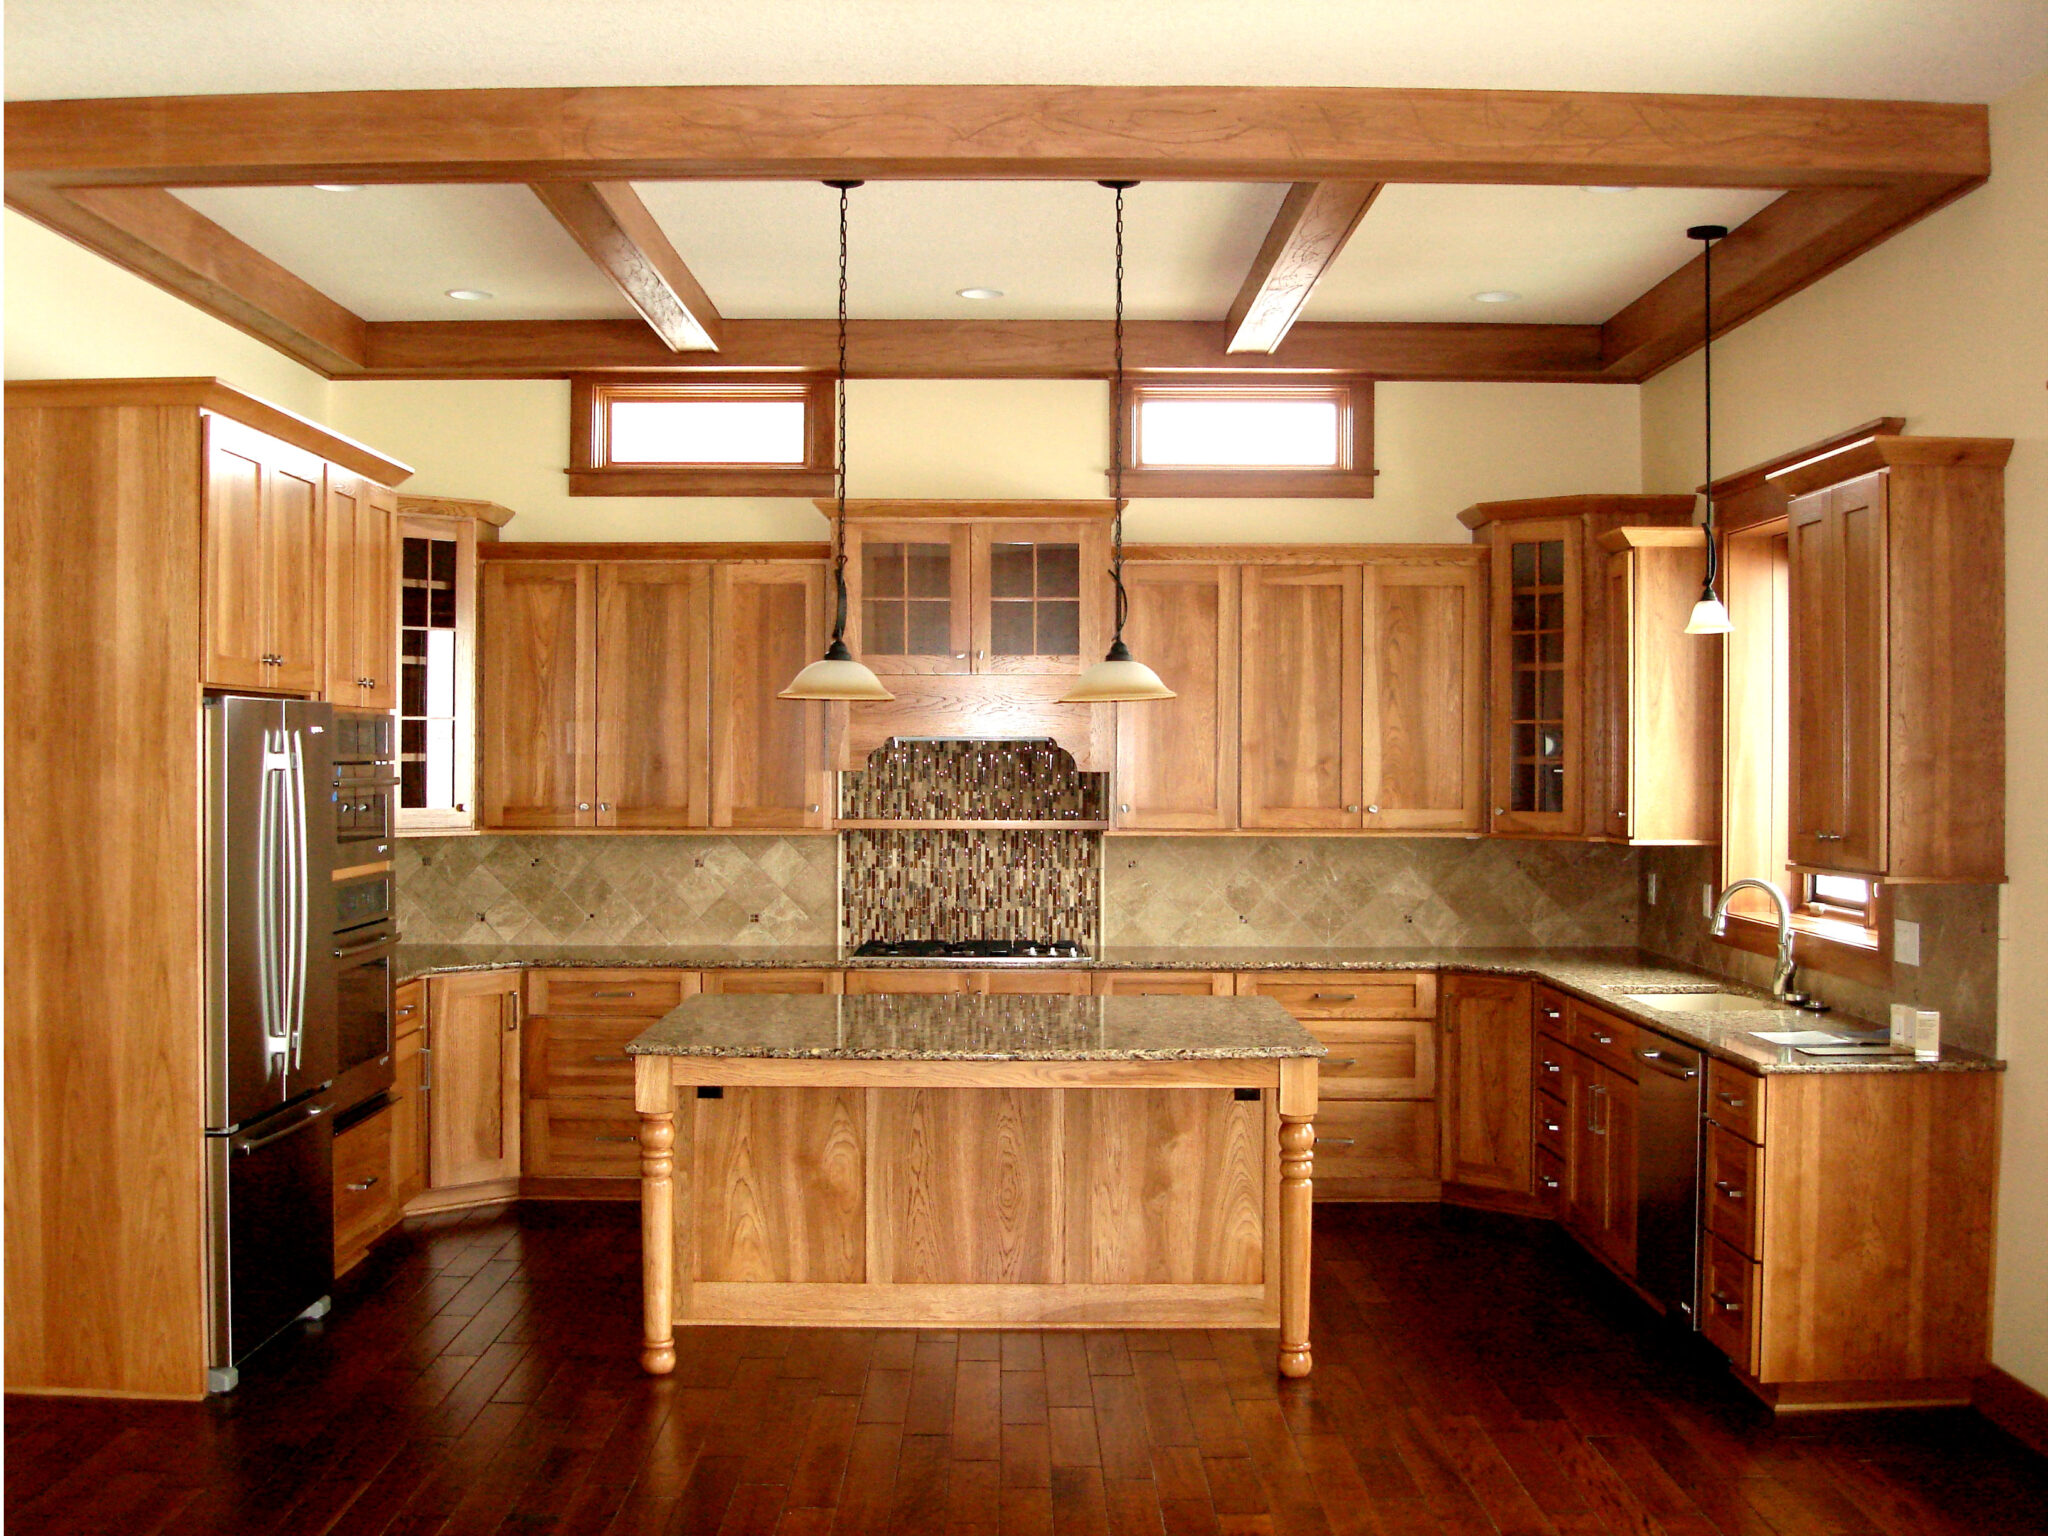 Backsplash kitchen tiles ideas with oak made cabinets